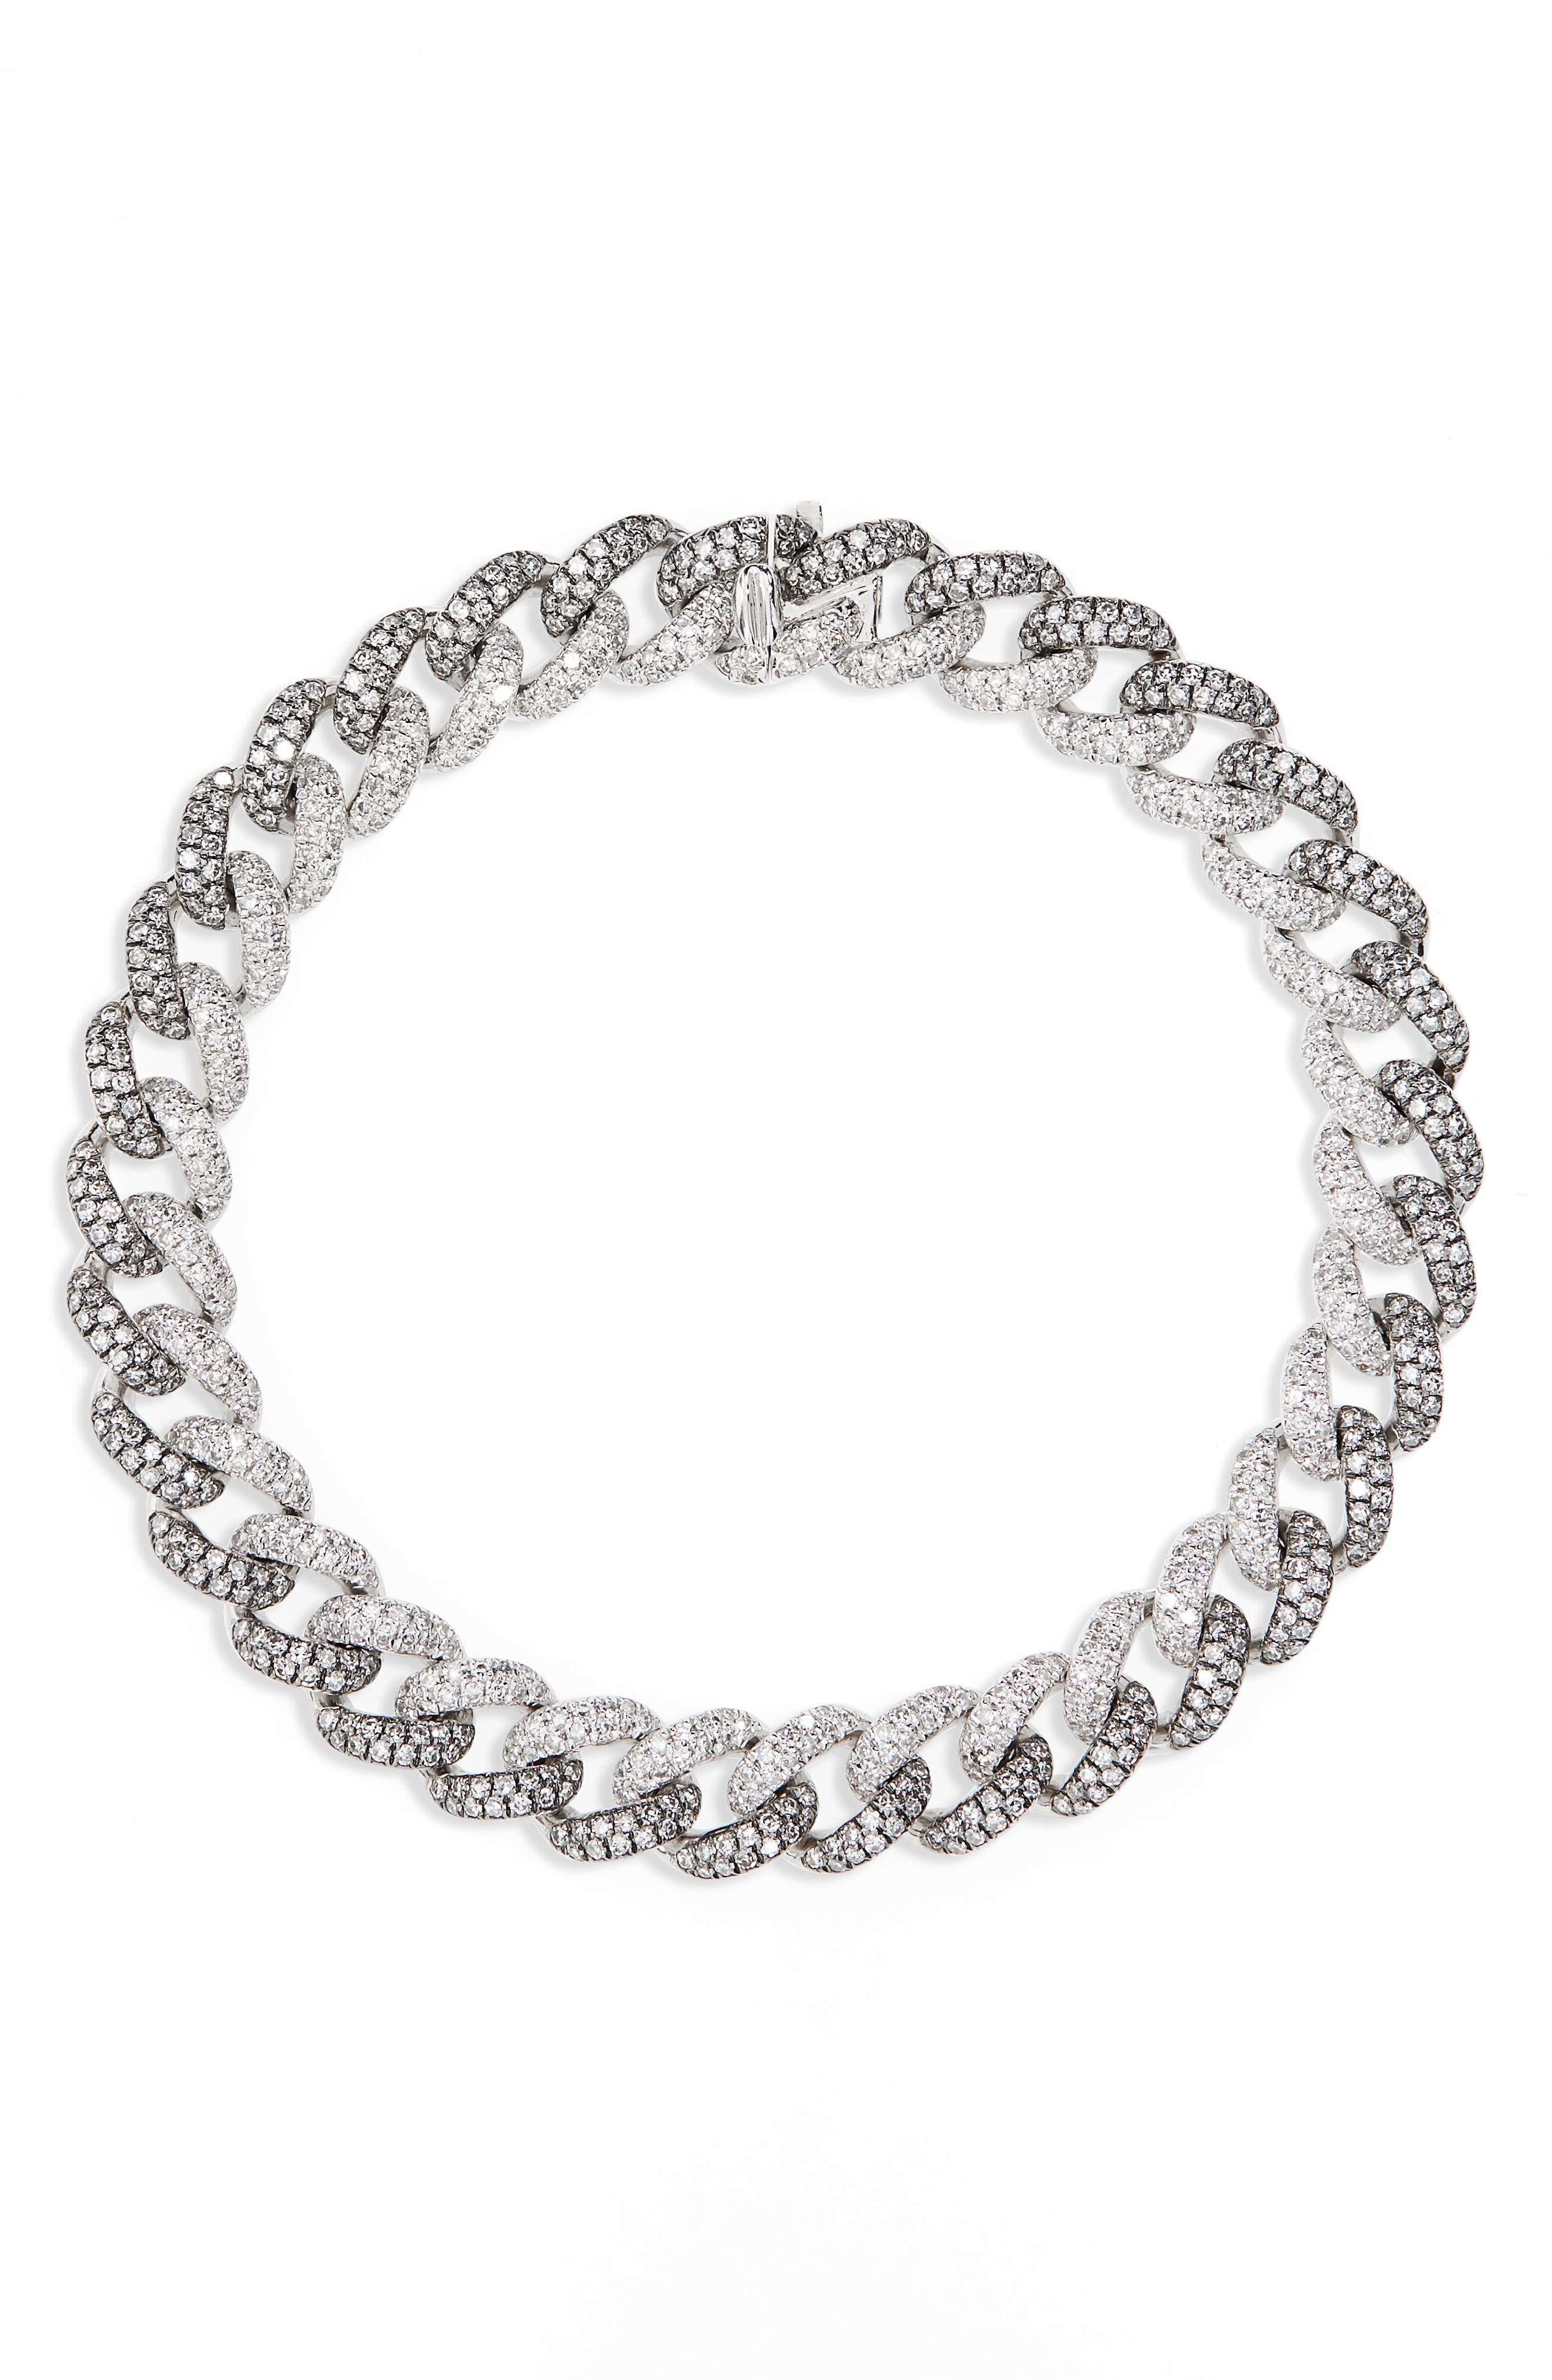 SHAY Medium Two-Tone Pave Diamond Link Bracelet in Black White Gold at Nordstrom